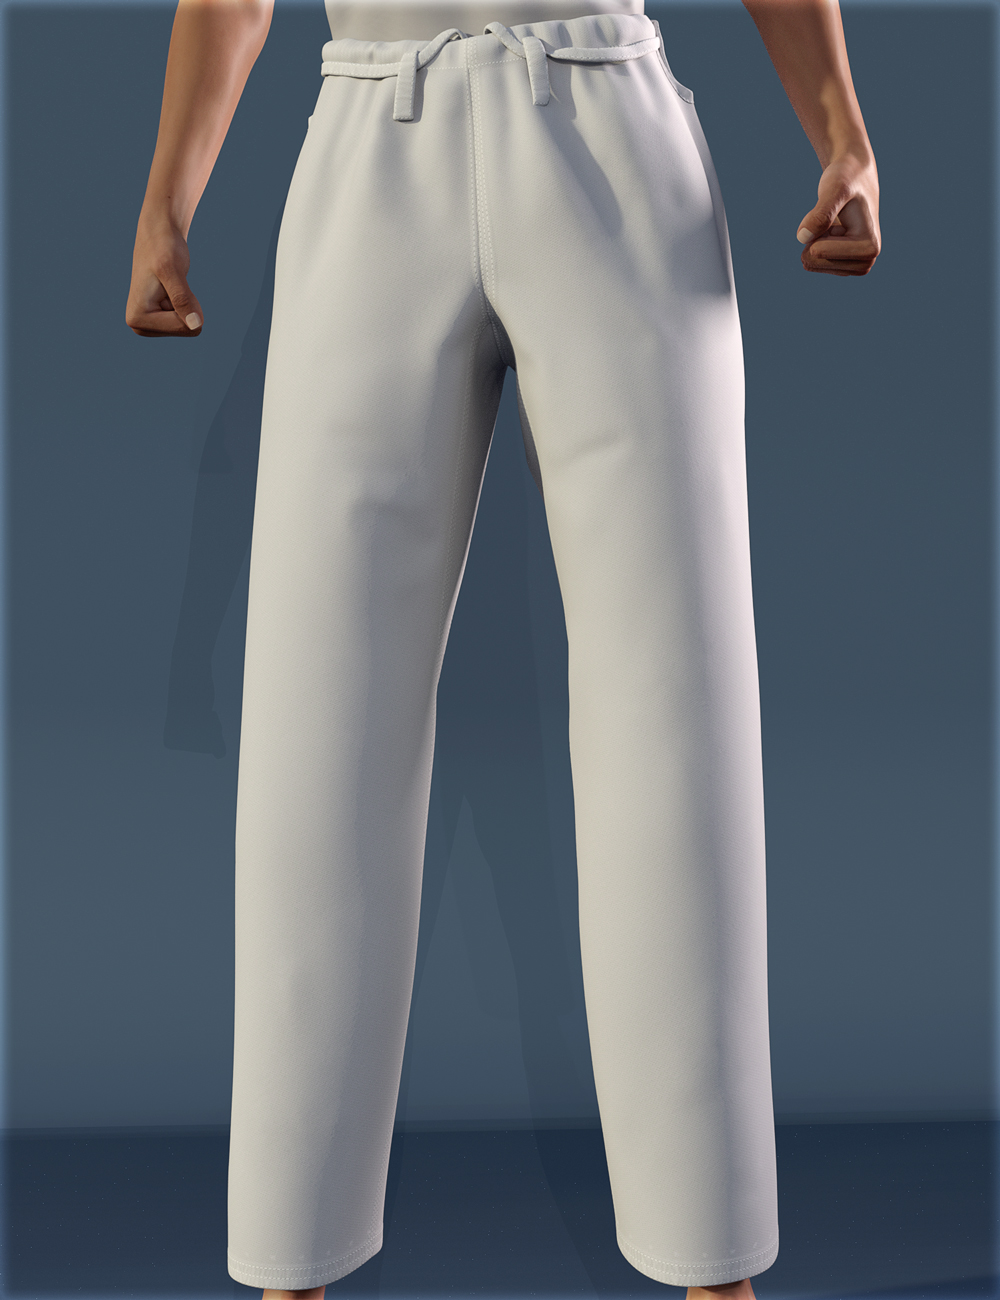 dForce HnC Judo Suit for Genesis 8 Females by: IH Kang, 3D Models by Daz 3D